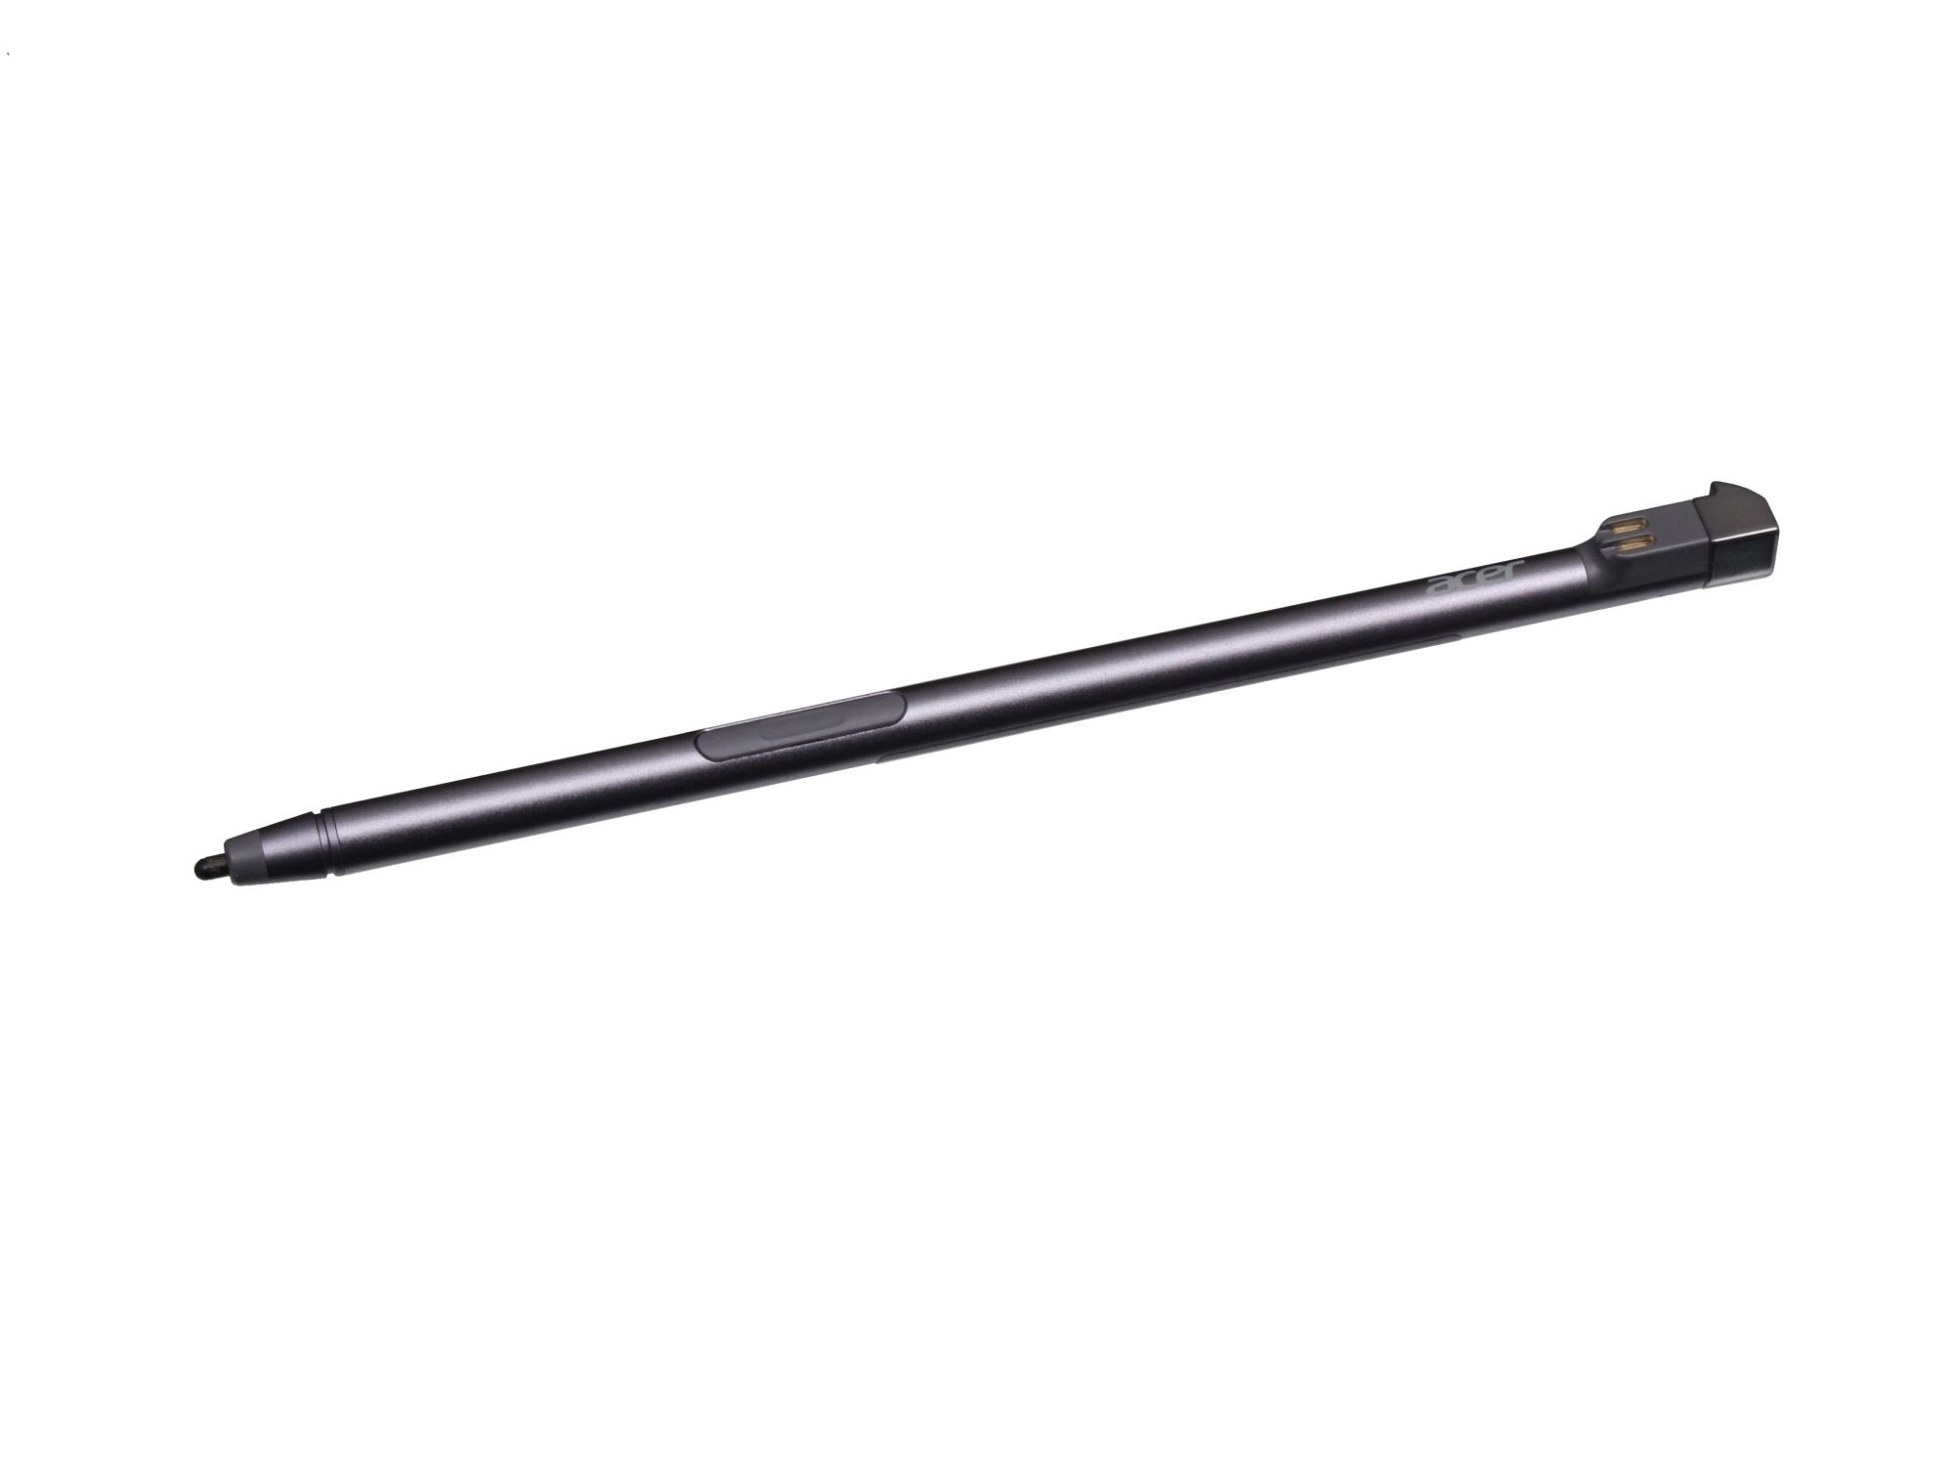 Acer US1371 Stylus Pen